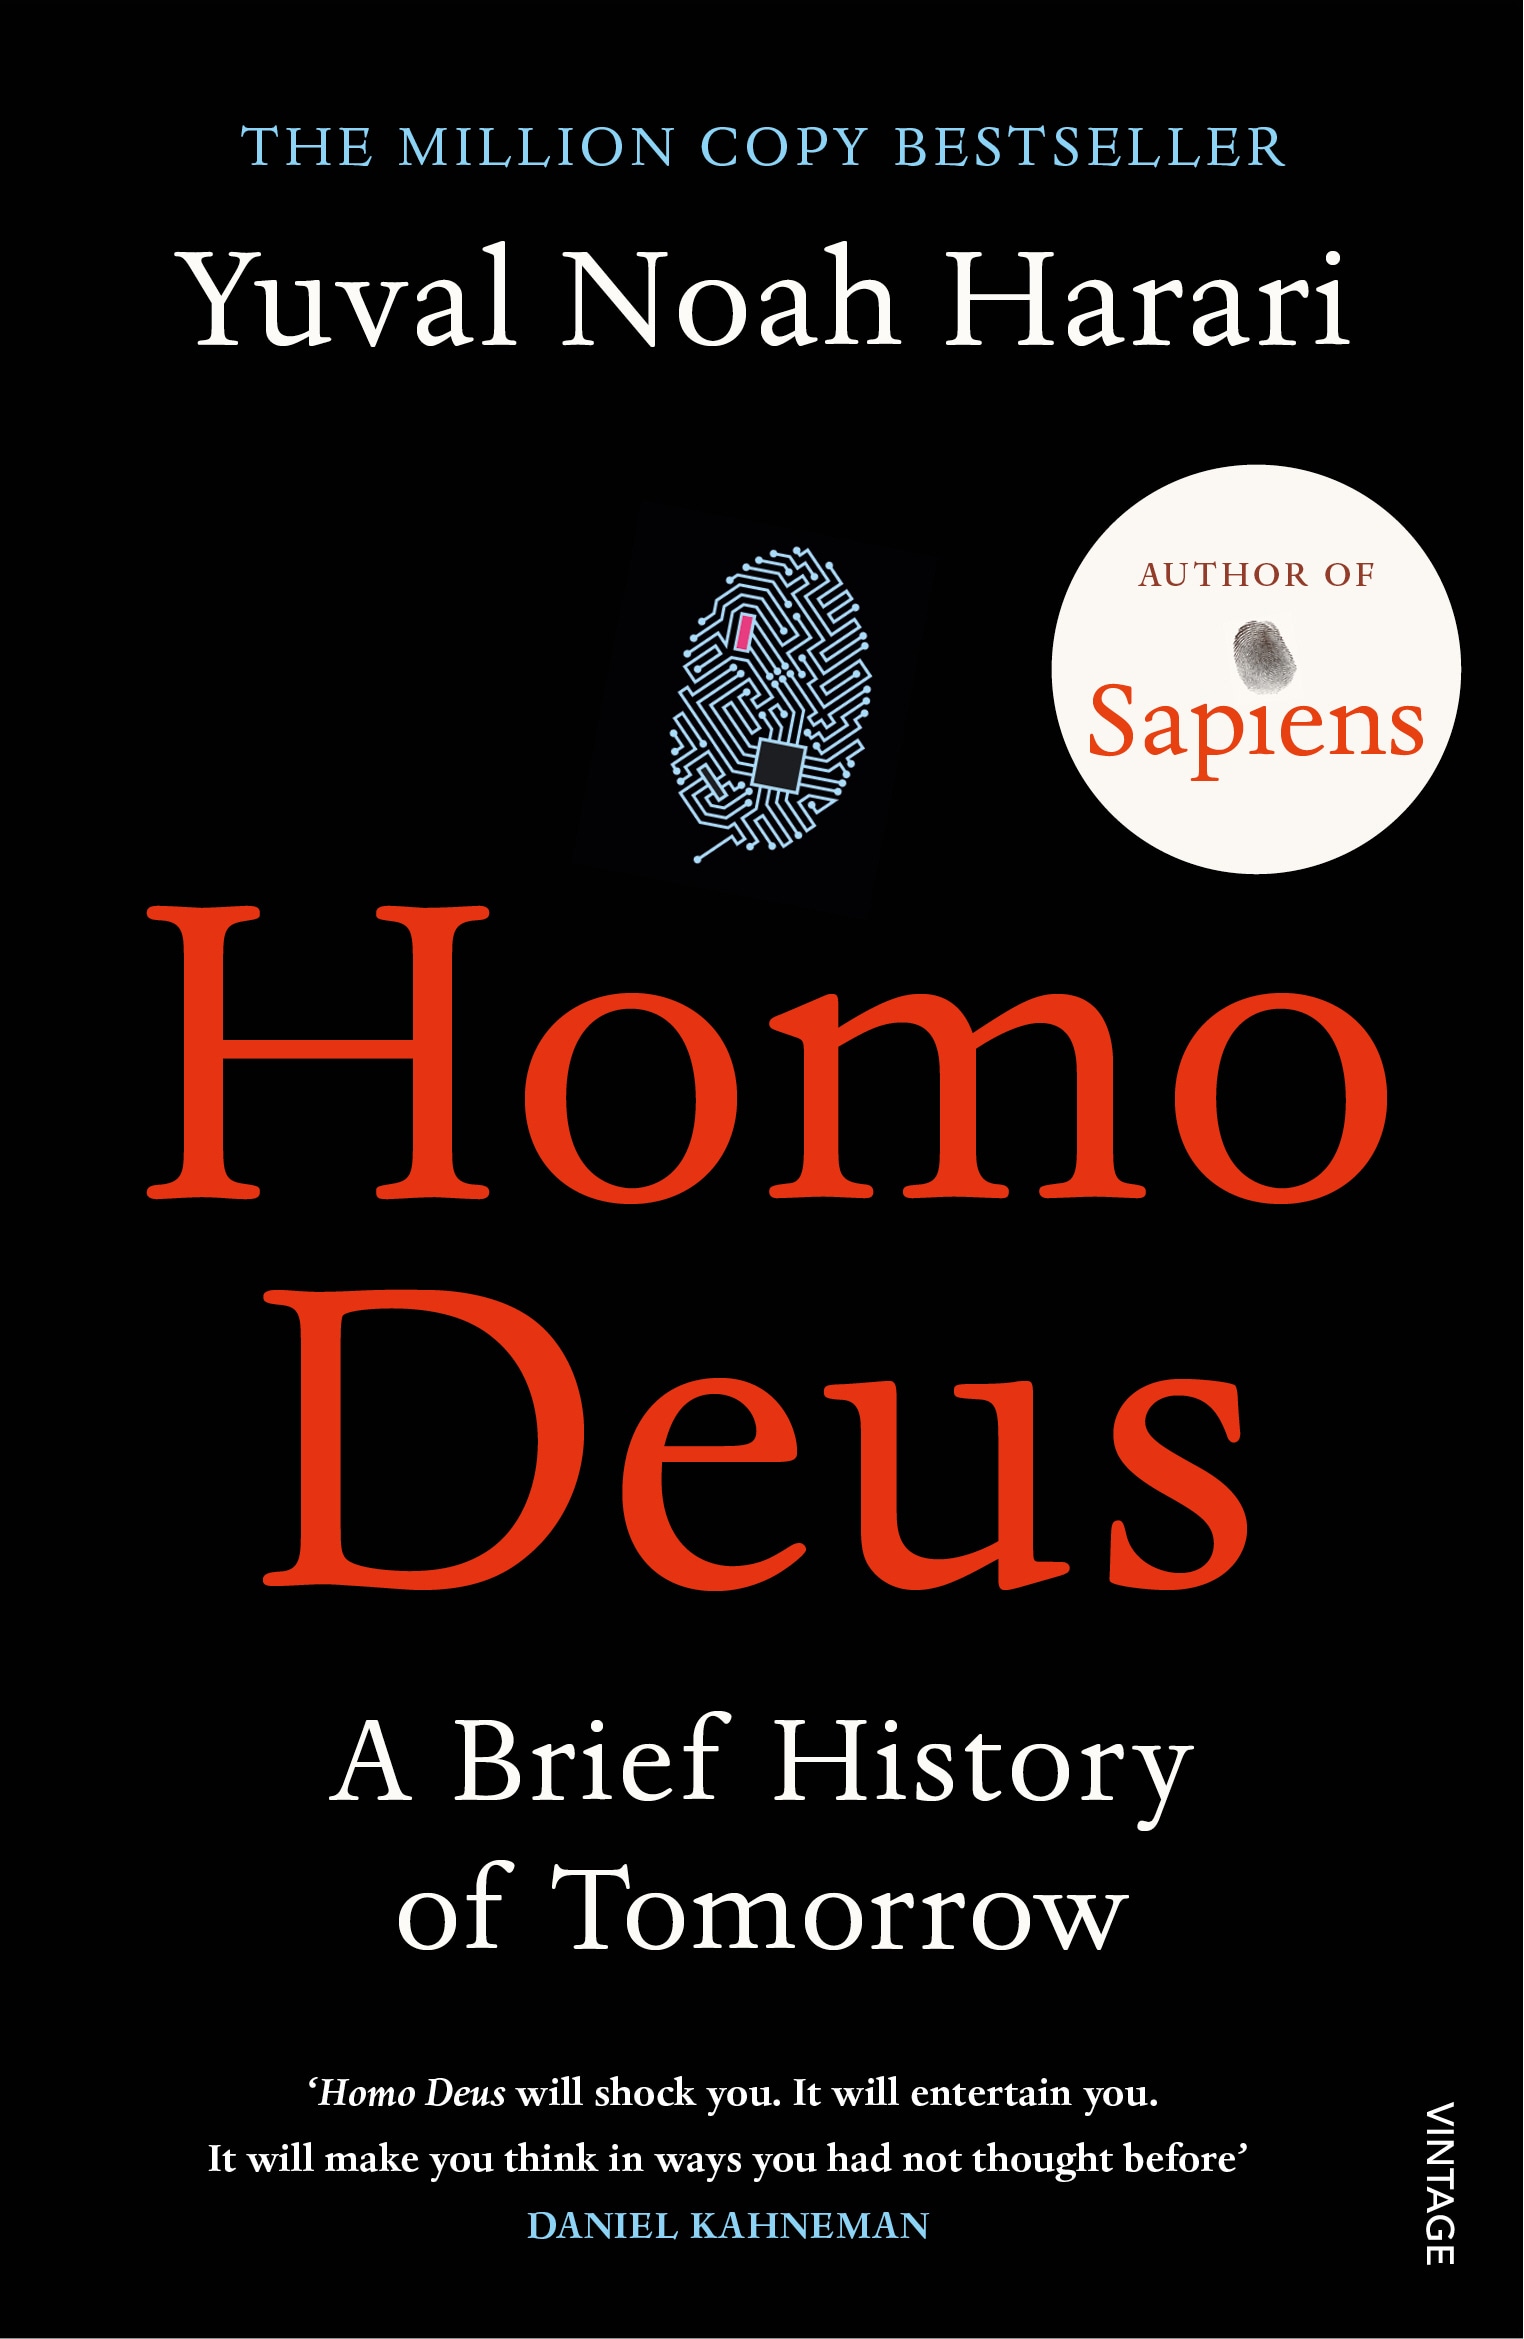 Book “Homo Deus” by Yuval Noah Harari — March 23, 2017